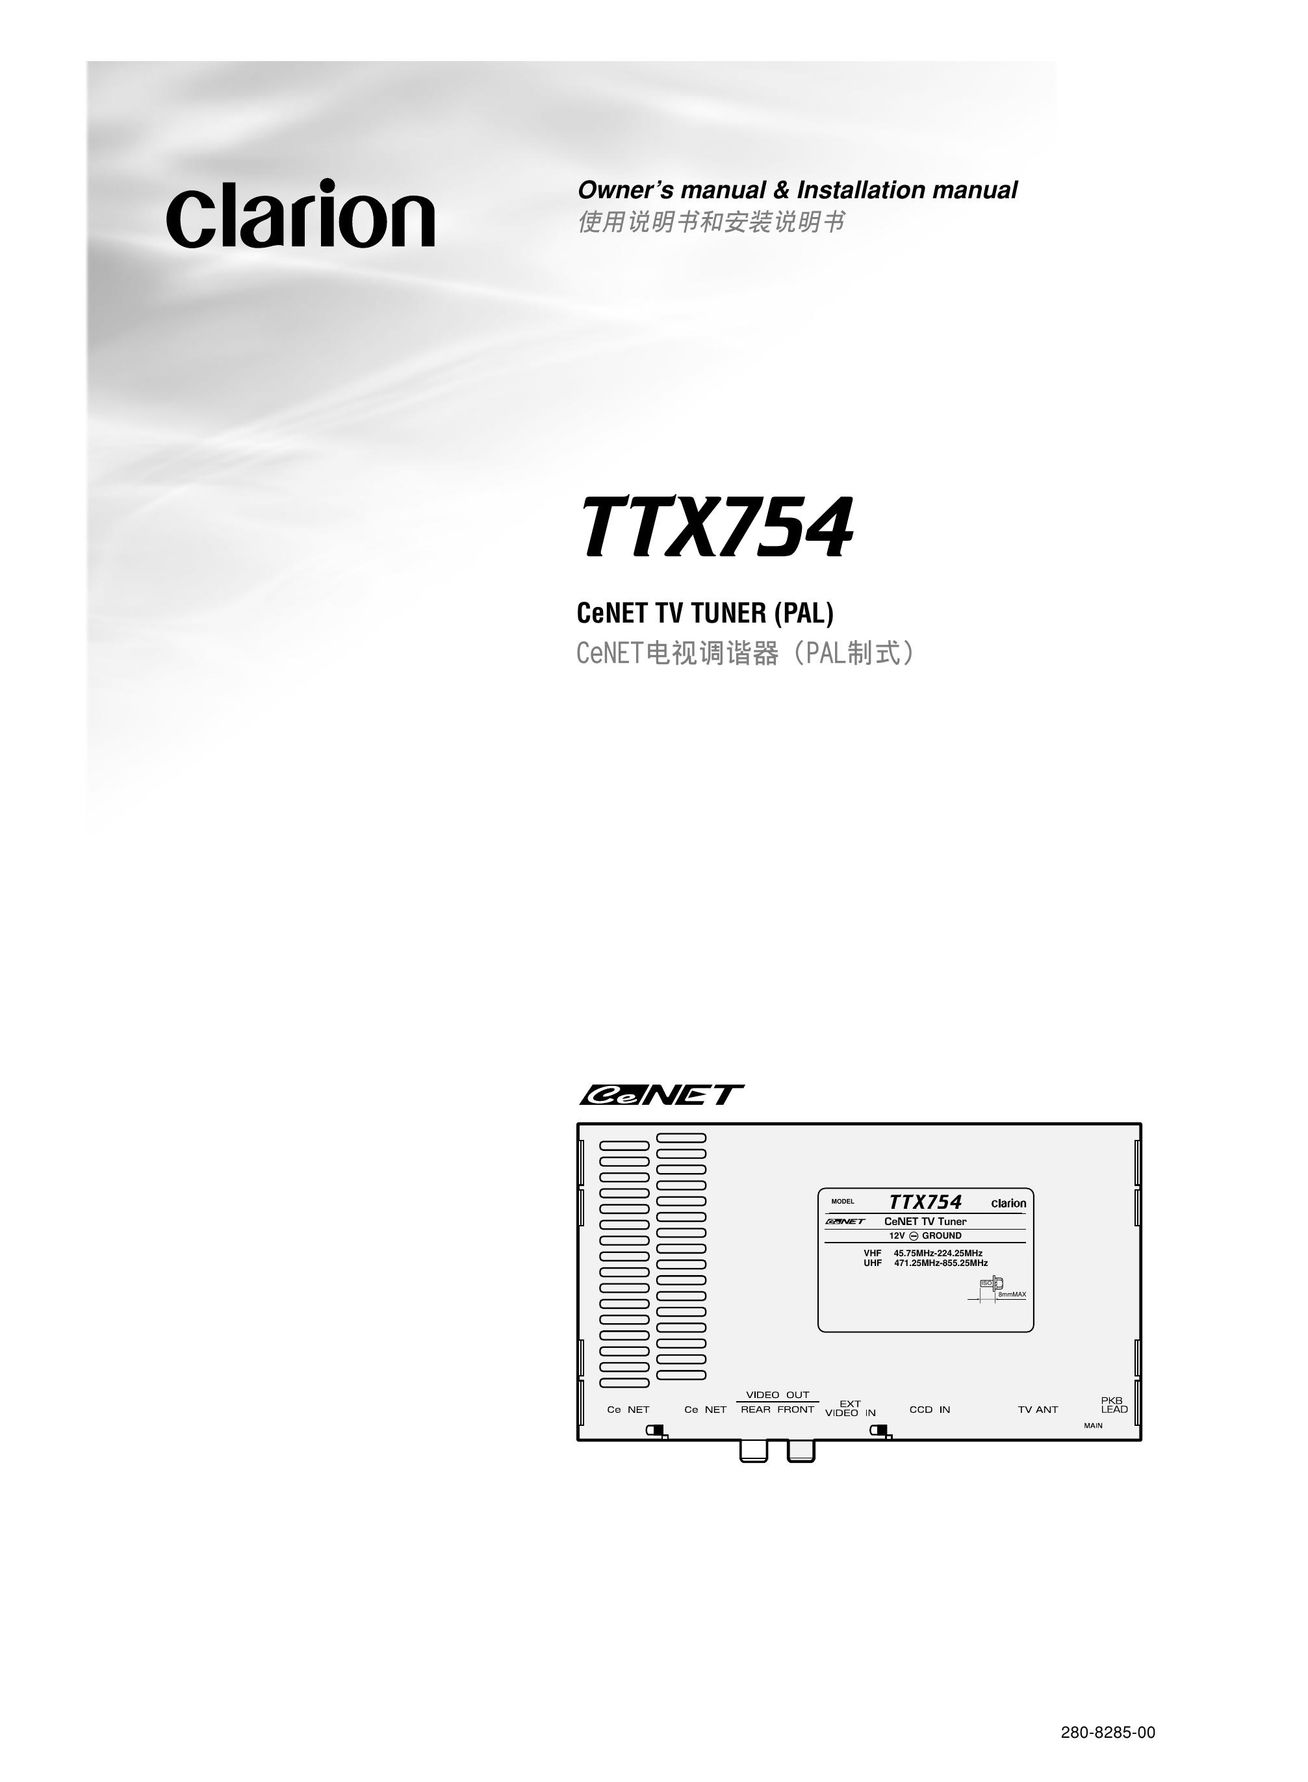 Clarion TTX754 TV Receiver User Manual